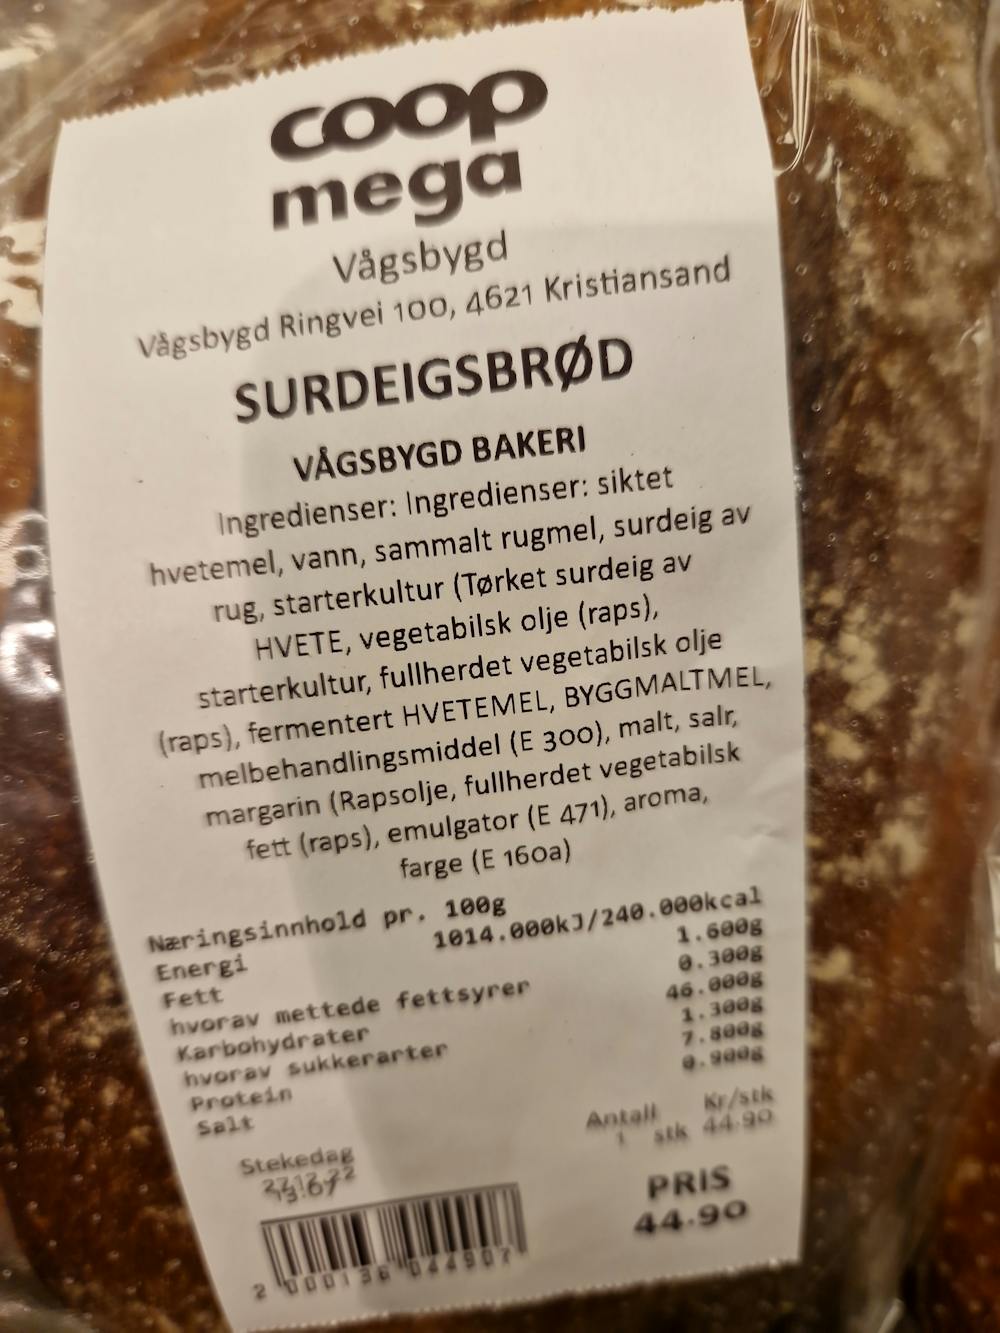 Ingrediensliste - Surdeigsbrød, Coop mega